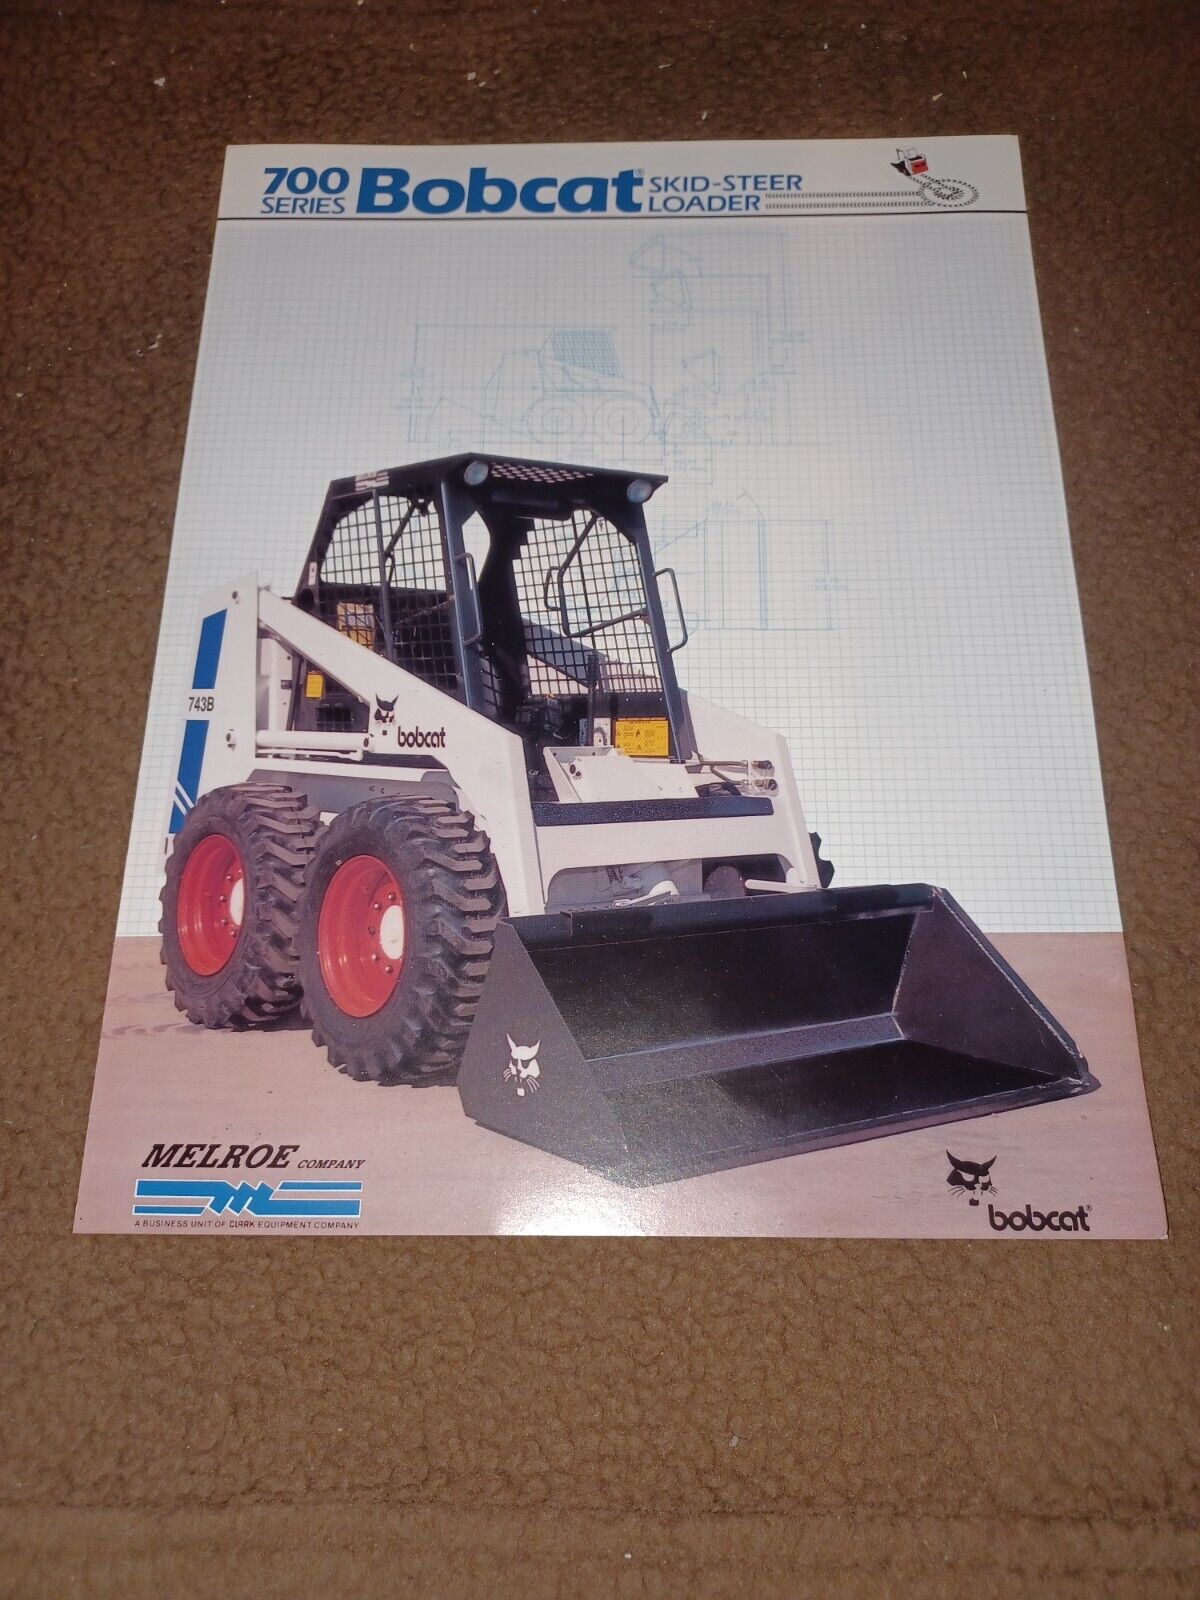 Bobcat 700 Series Skid Steer Loader Brochure Melroe Company, Tiffin, Ohio 